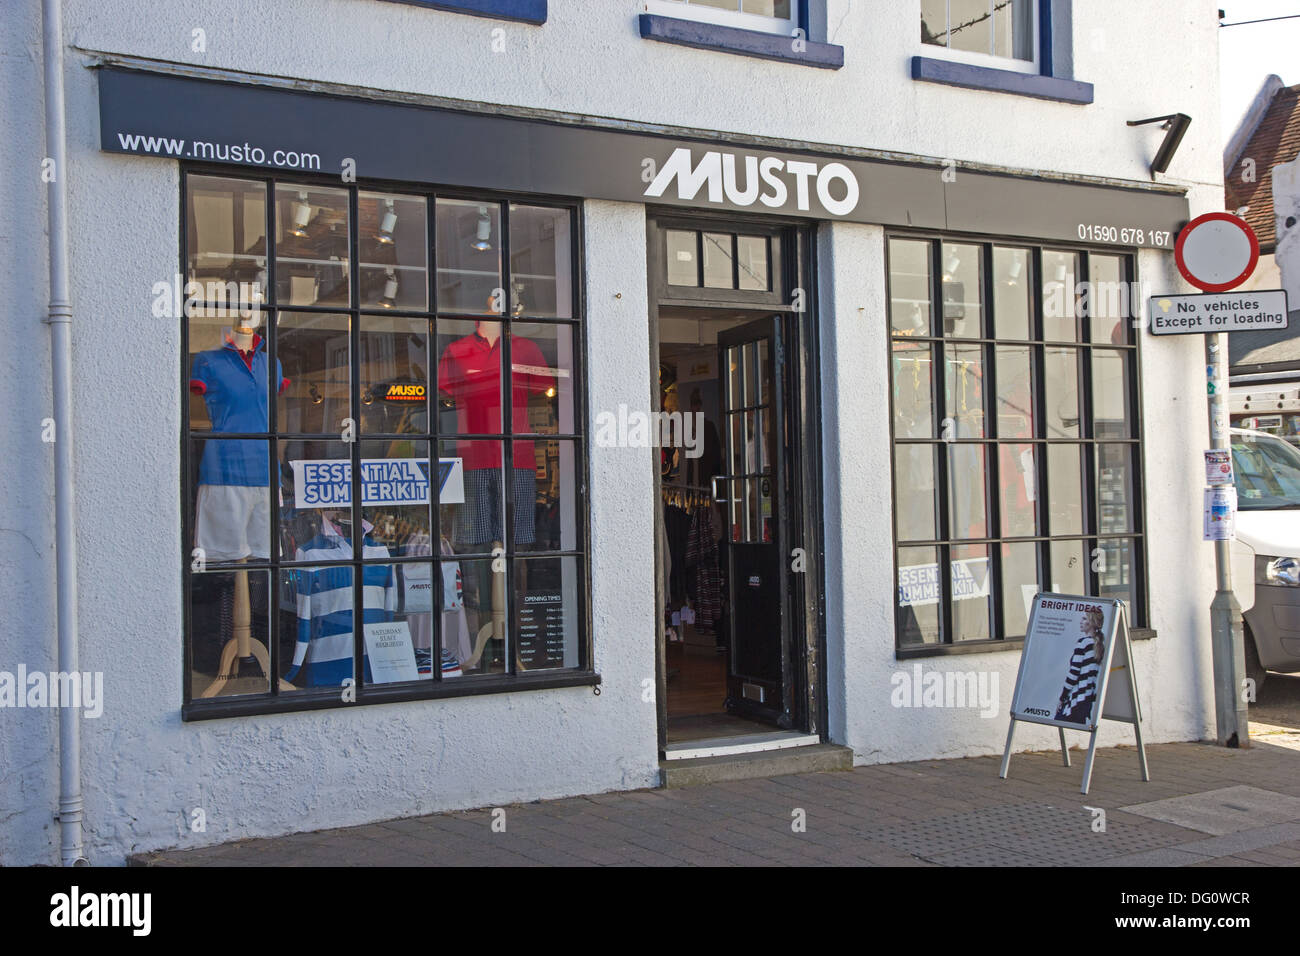 Musto Bekleidung shop Stockfoto